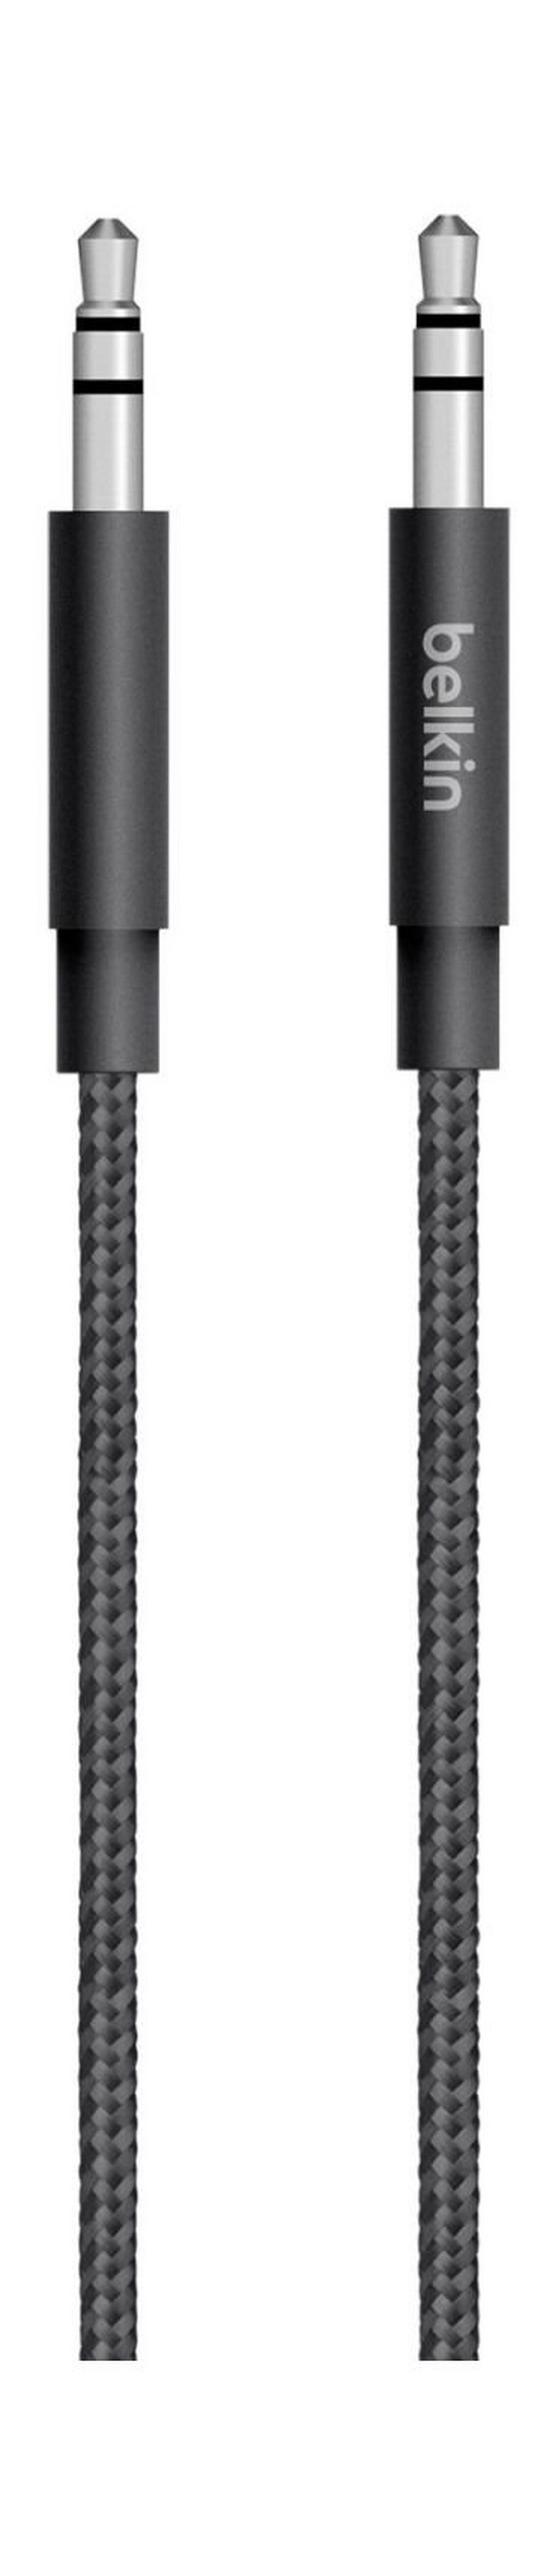 Belkin Mixit Metallic AUX Cable 1.2 Meters (AV10164bt04) - Black